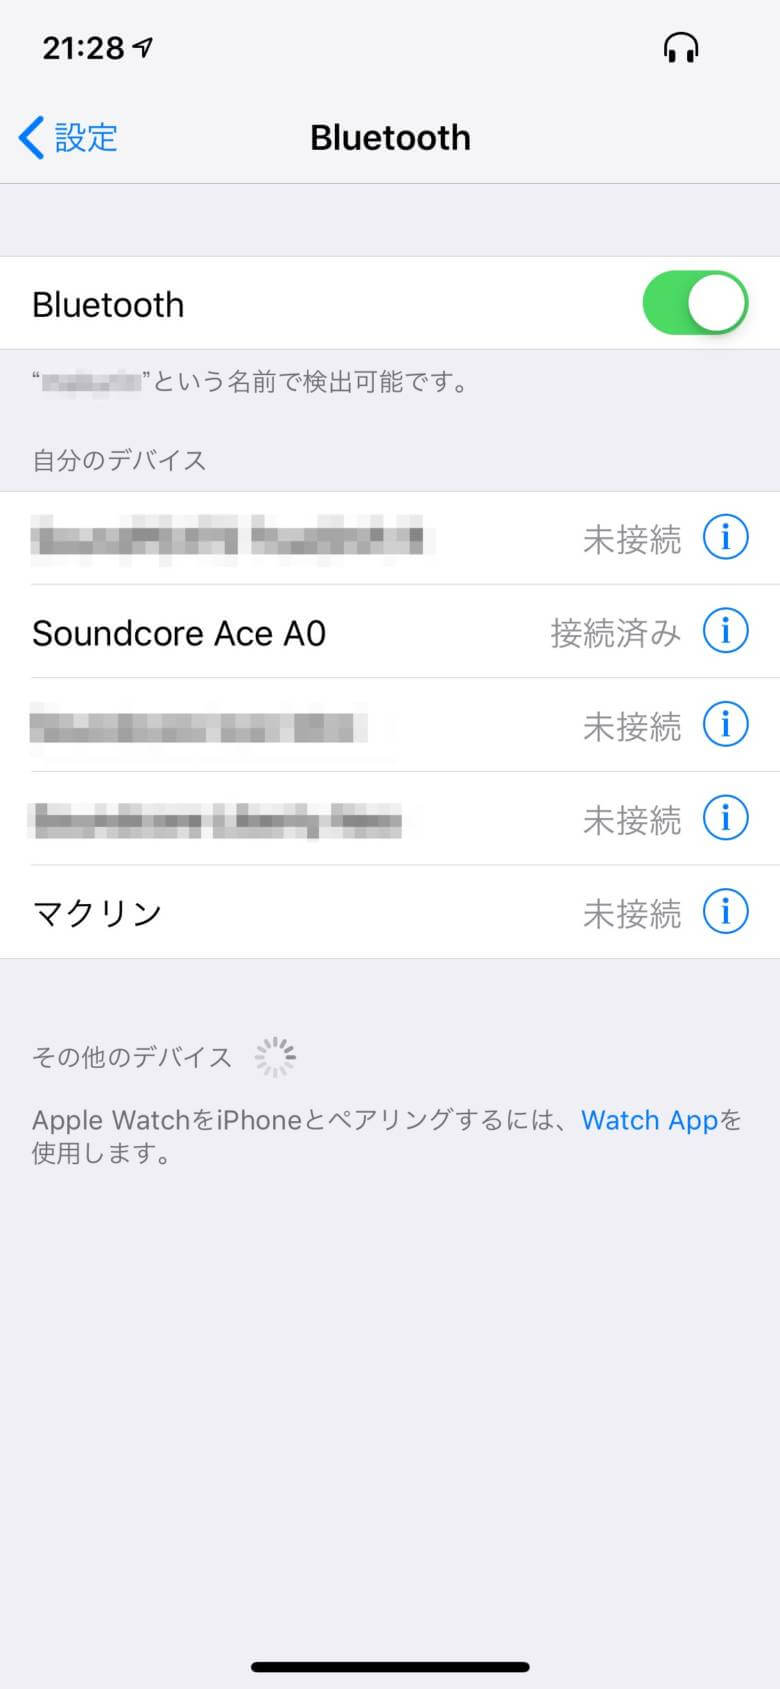 Soundcore Ace A0のペアリング接続完了